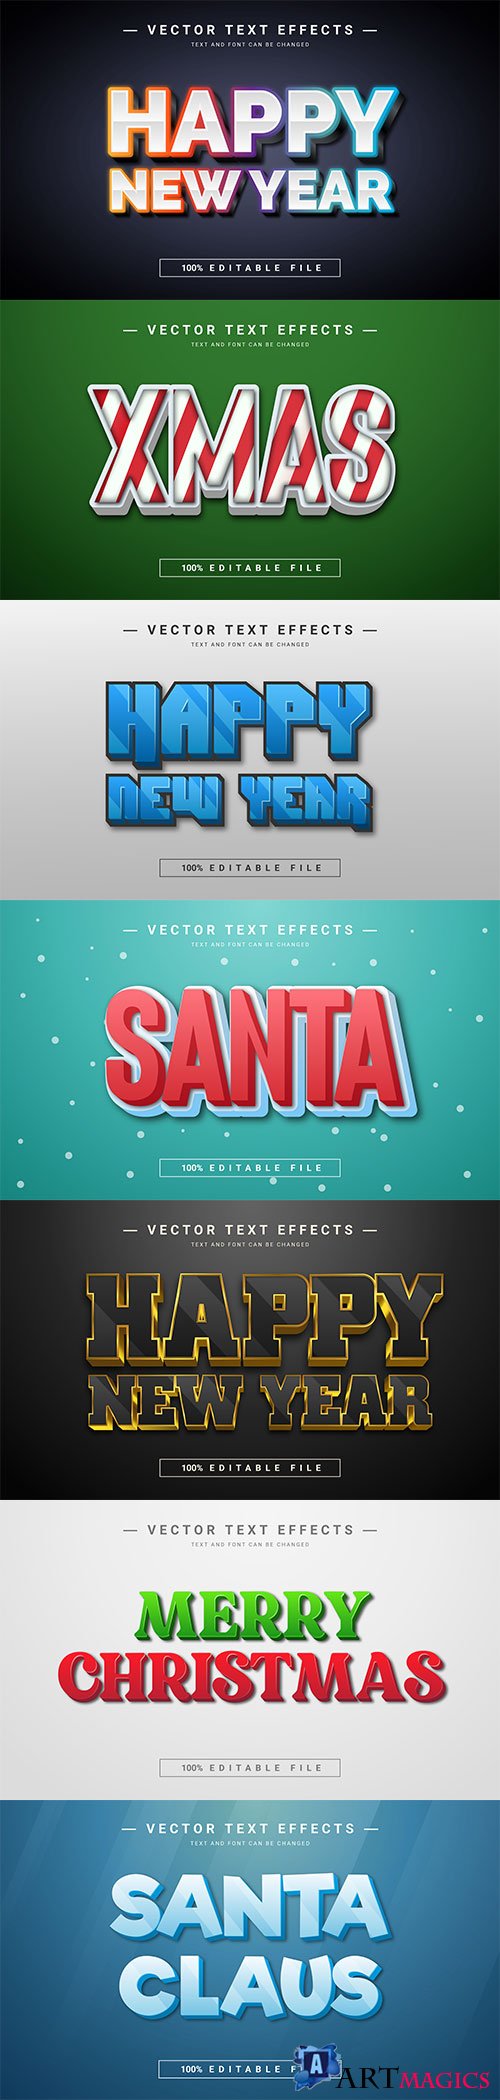 2022 New year, Merry christmas editable text effect premium vector vol 14